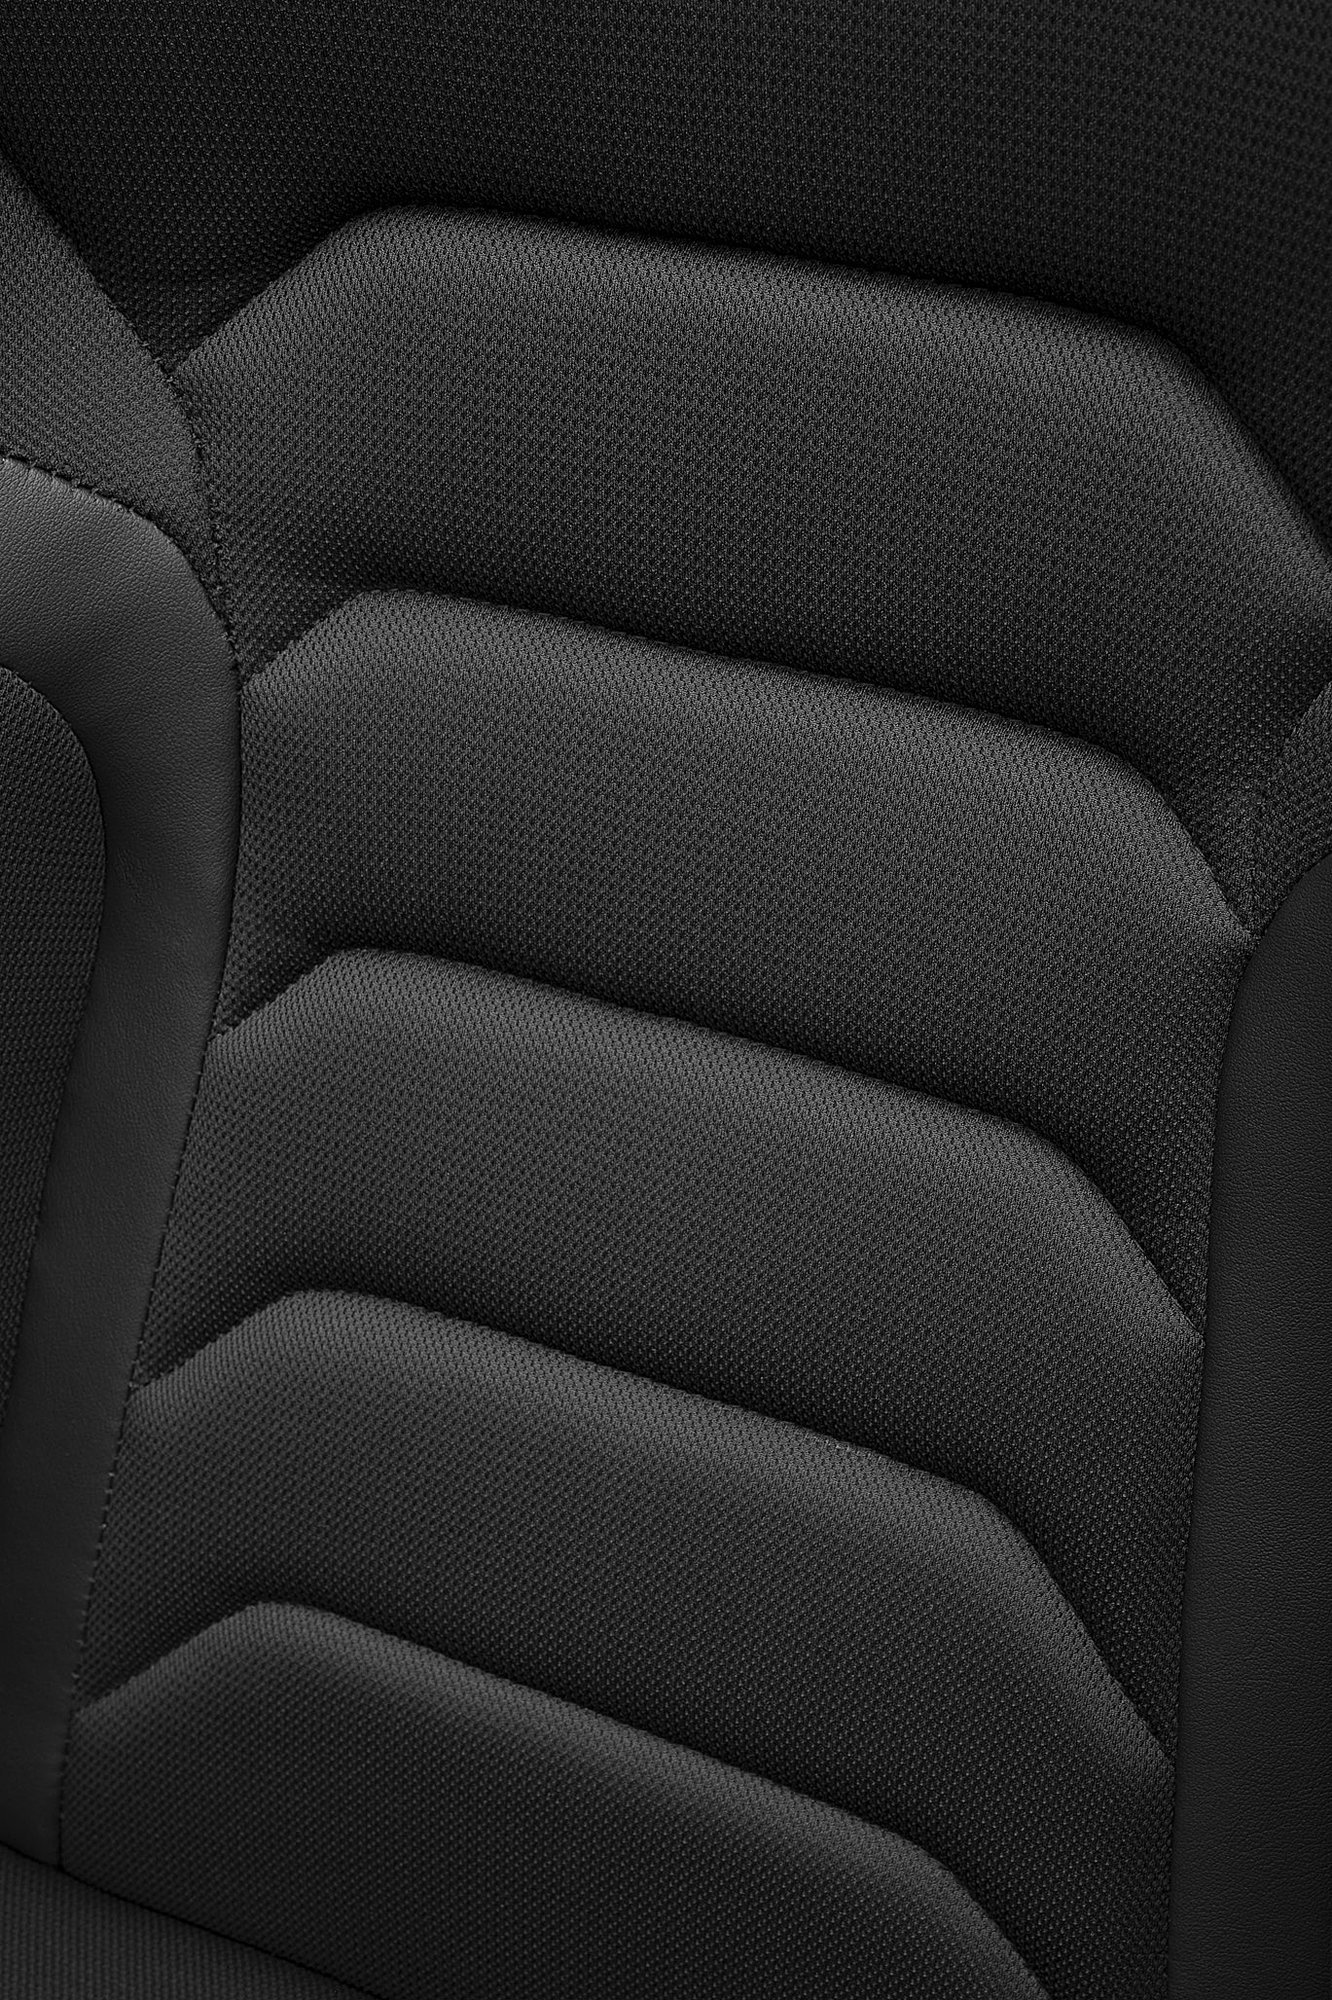 Corbeau FX1 Fixed Back Seat Black Cloth Wide 29501W